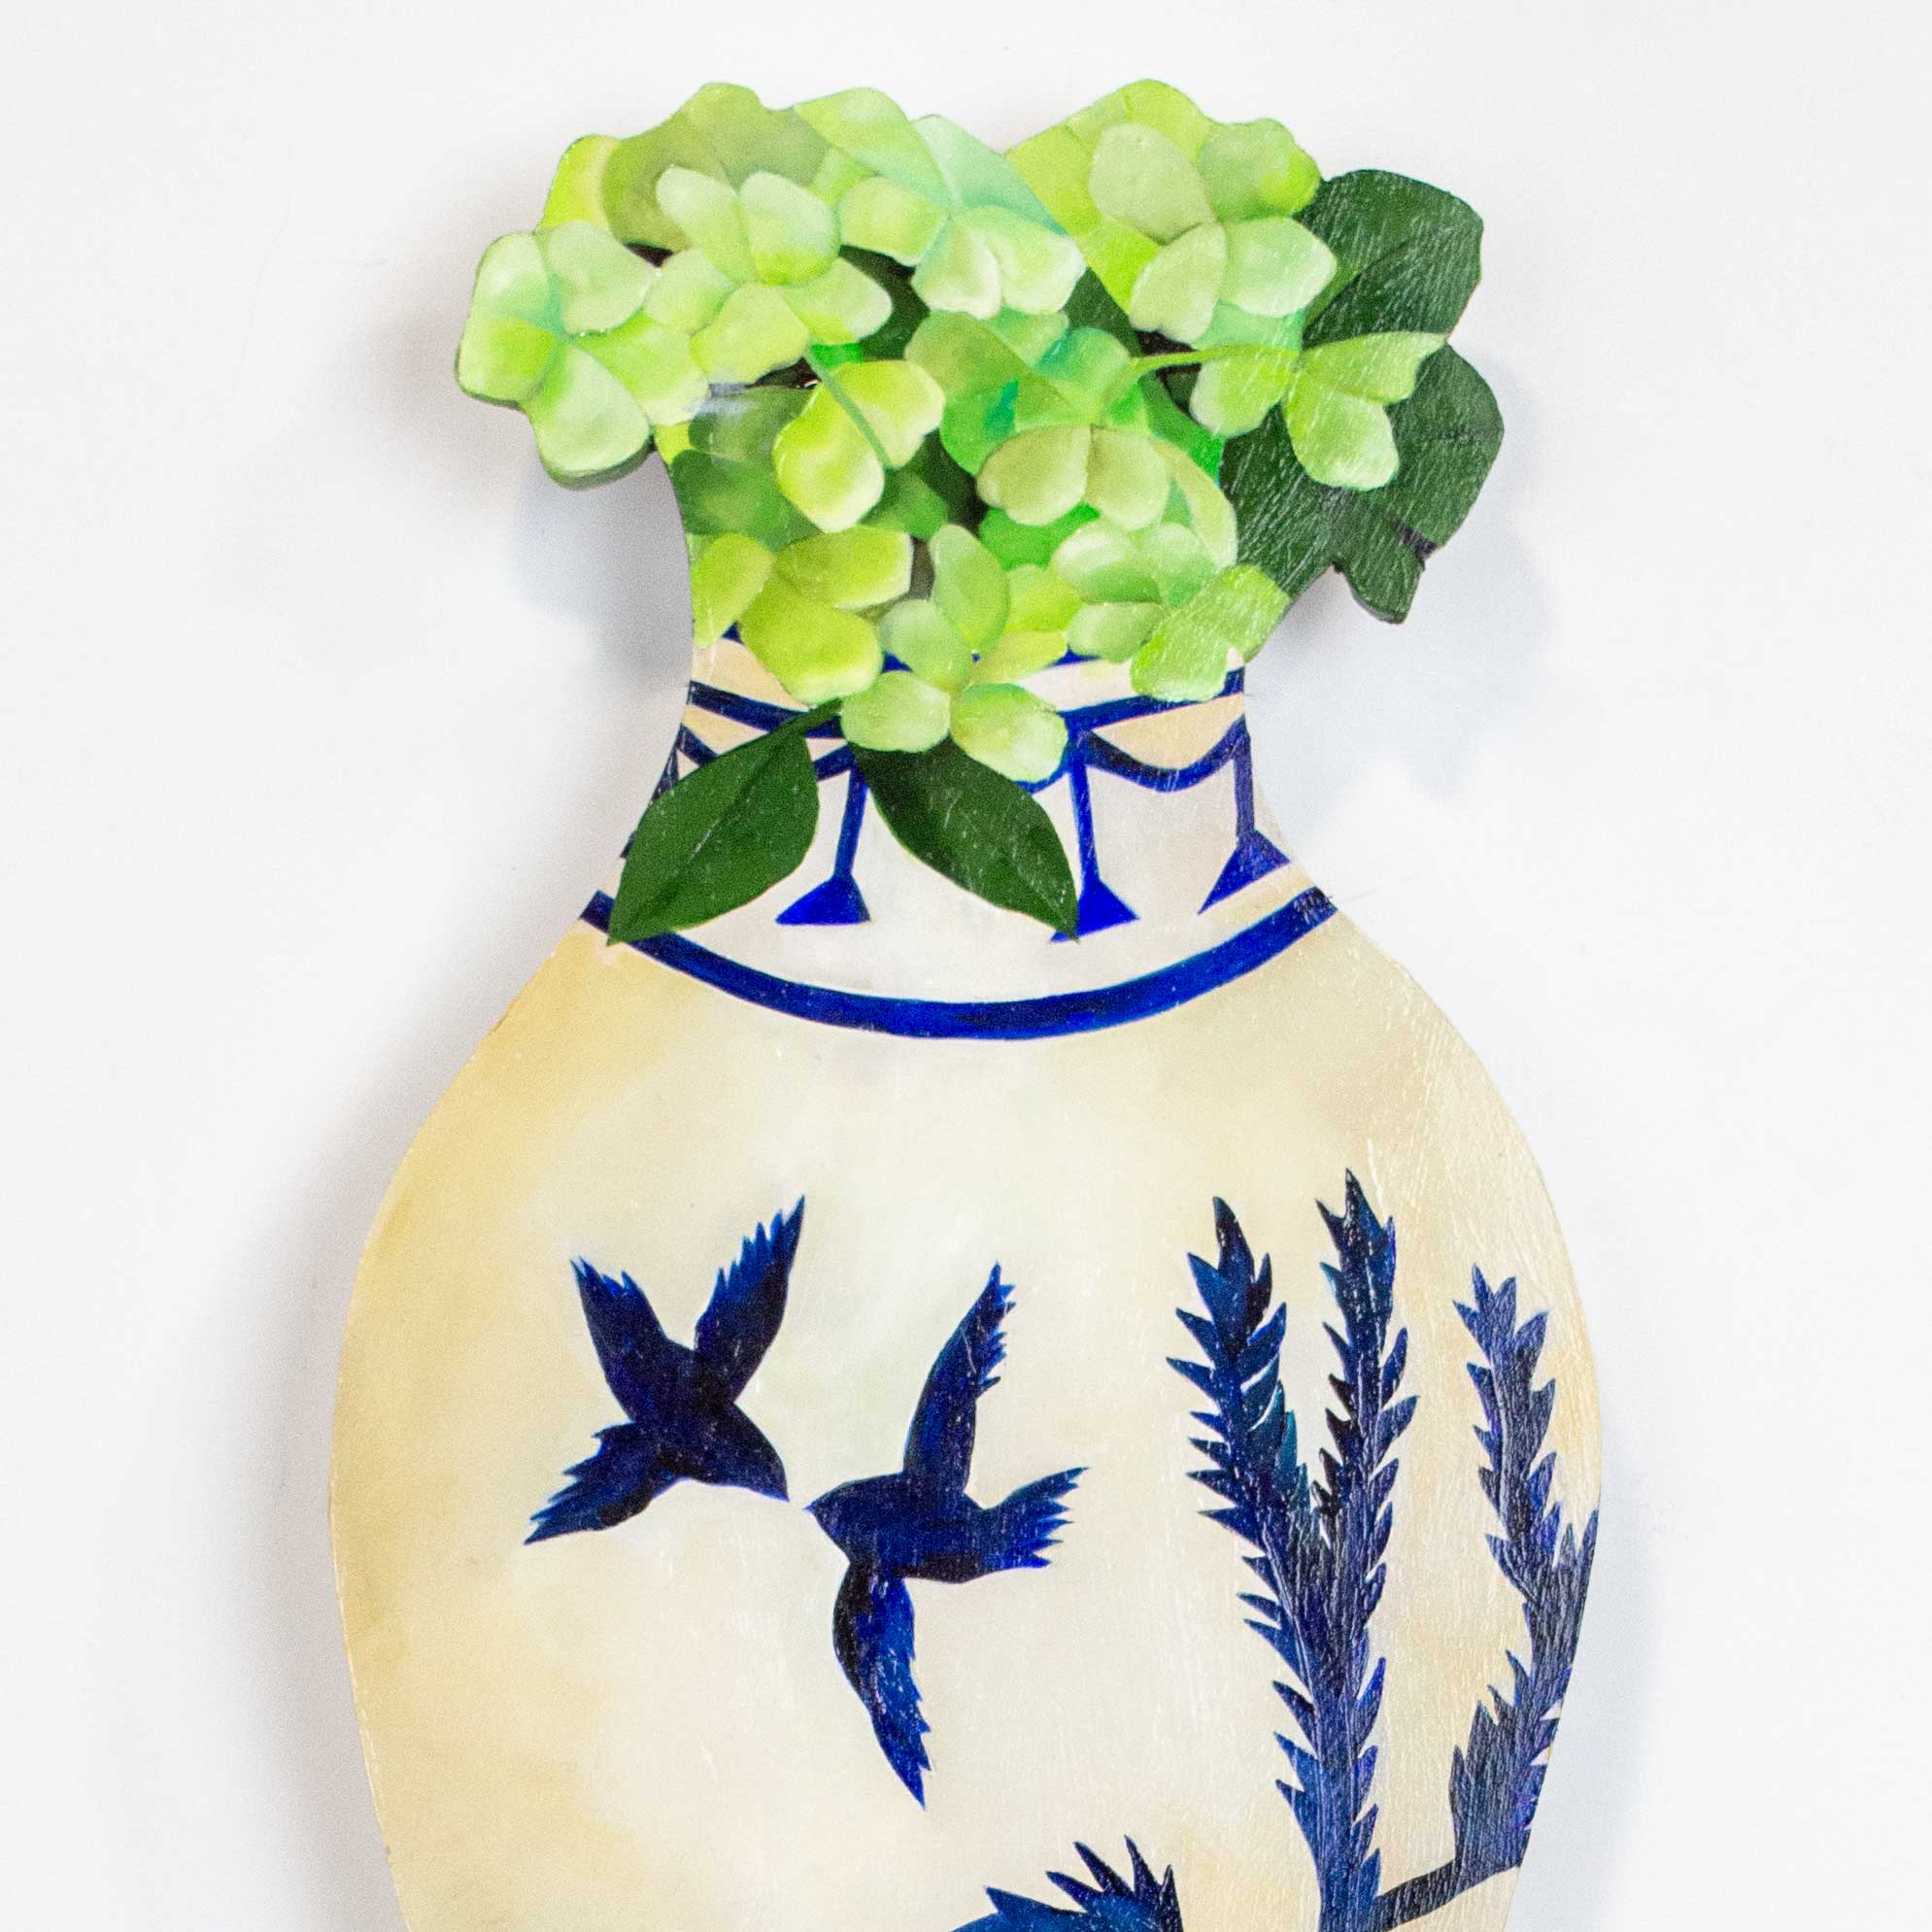 Willow Pattern Vase II